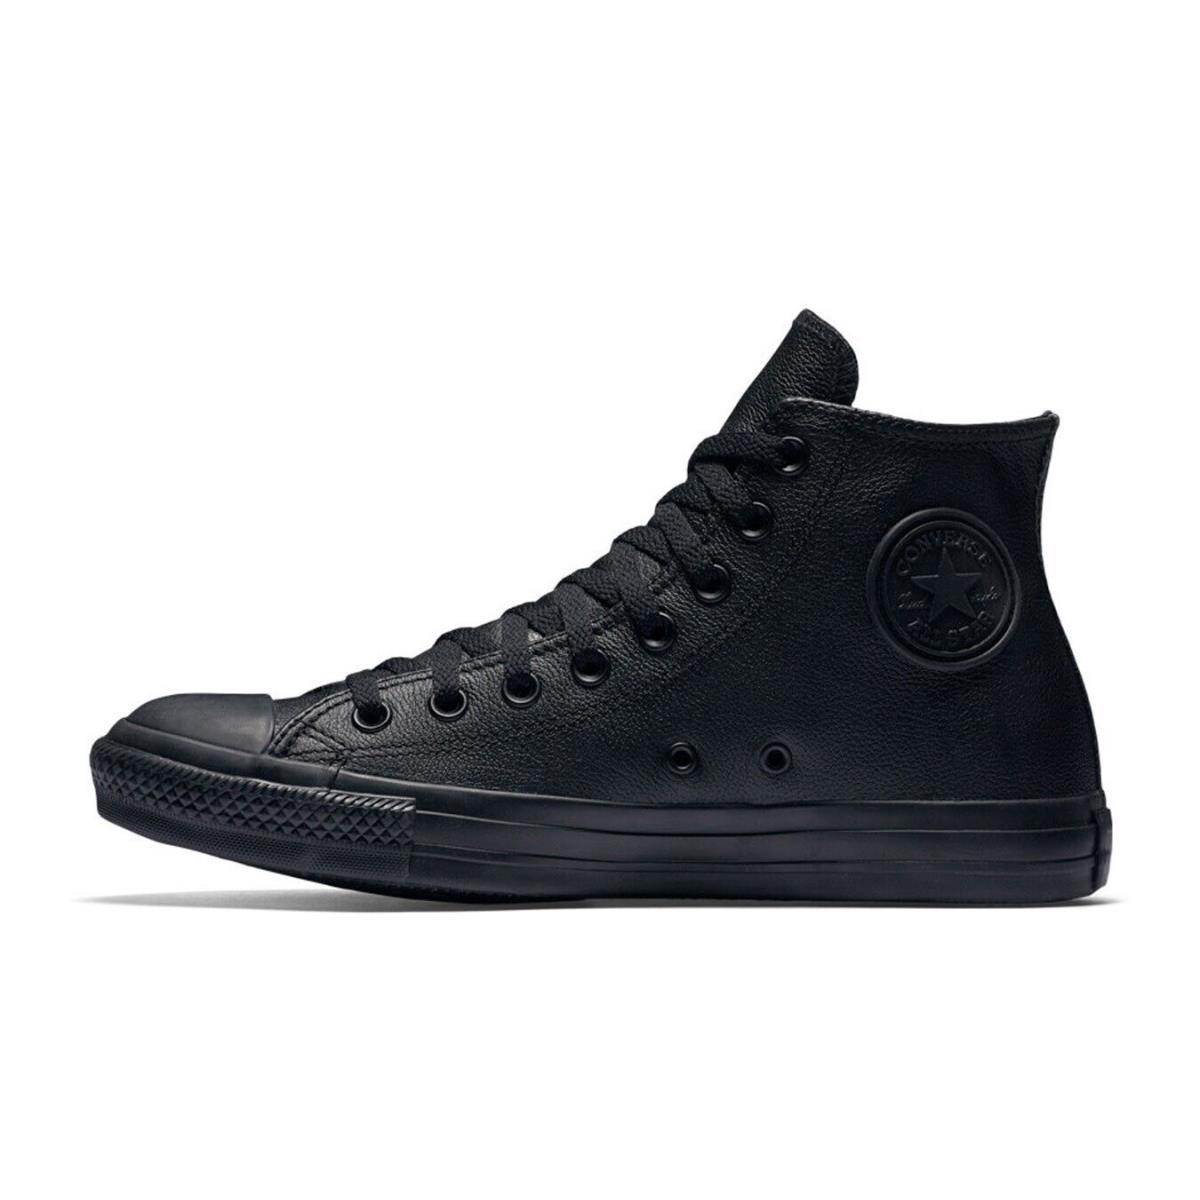 Converse Chuck Taylor All Star 135251C Unisex Black Mono Leather Shoes C157 - Black